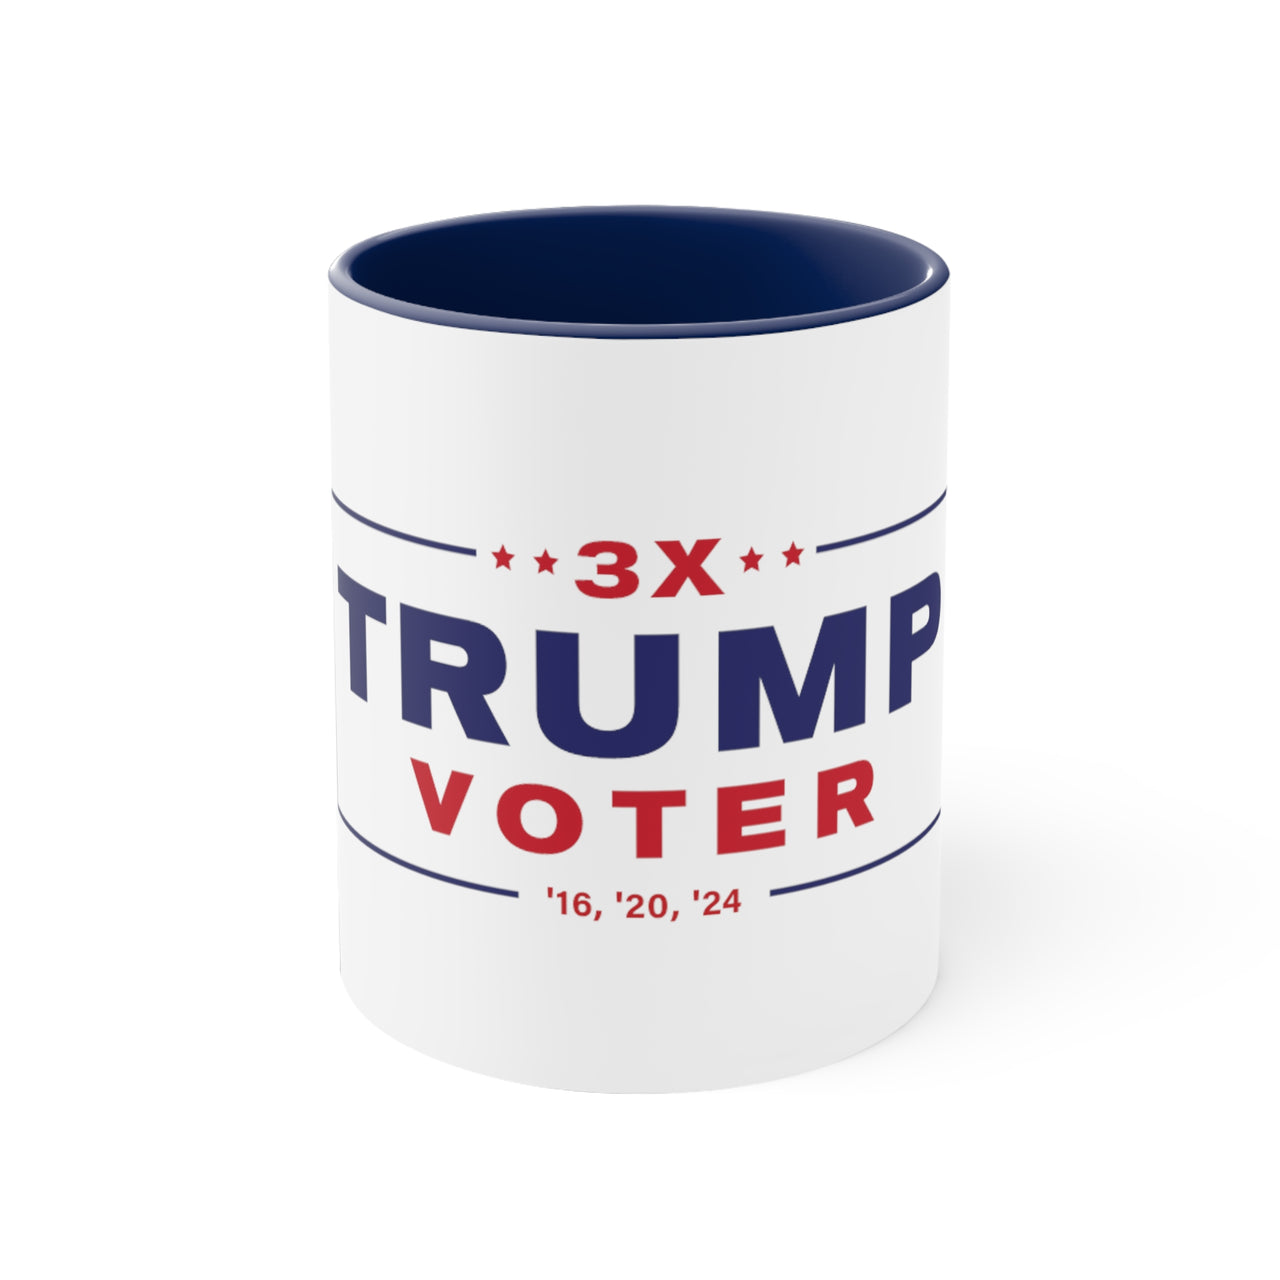 3X Trump Voter Mug